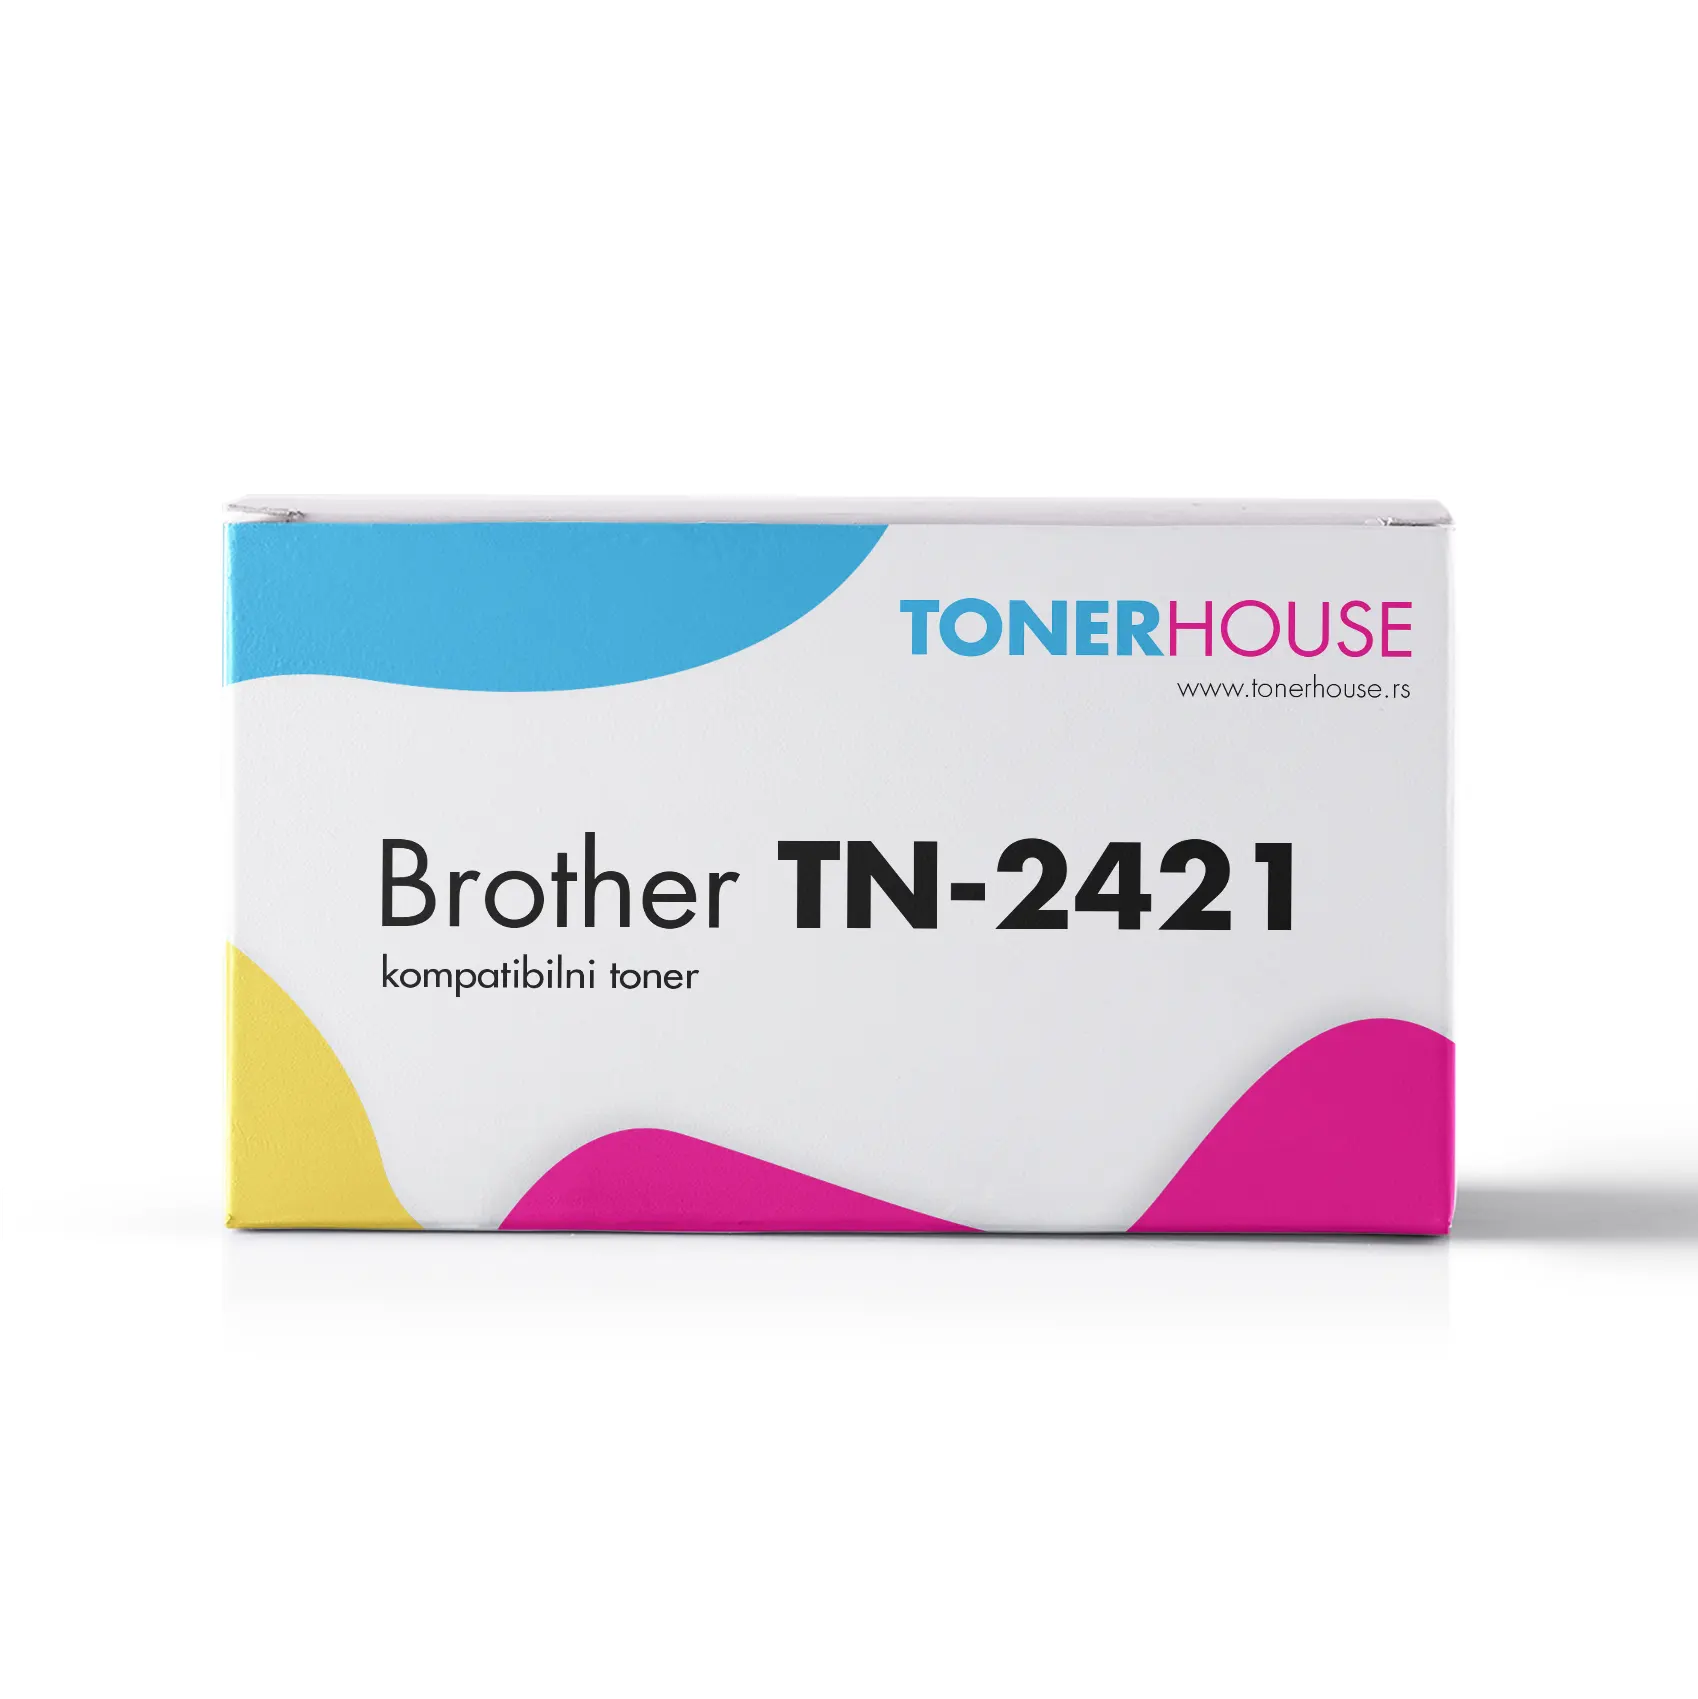 Brother TN-2421 Toner Kompatibilni